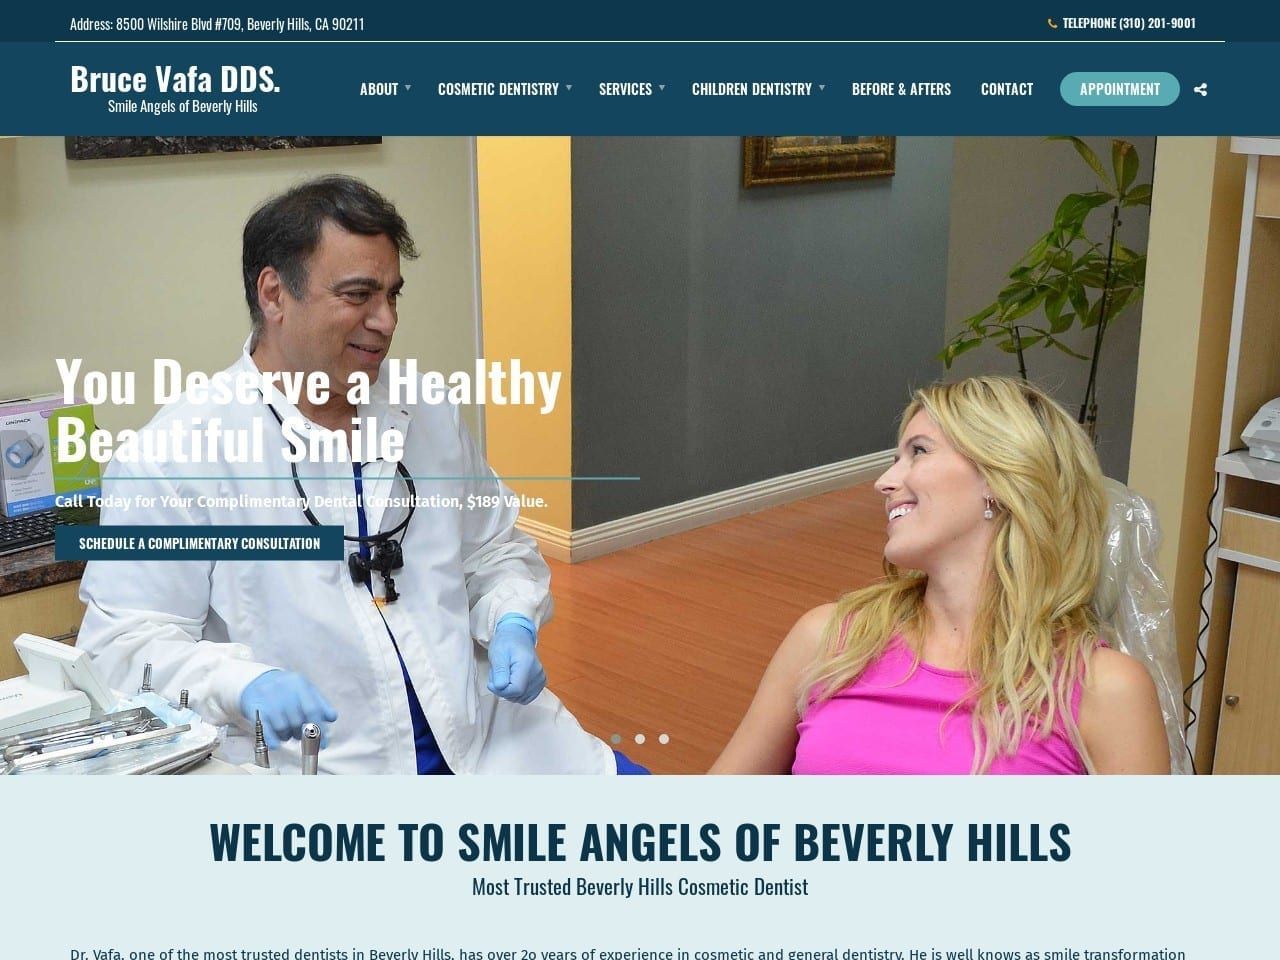 Smile Angels of Beverly Hills Website Screenshot from smileangels.com